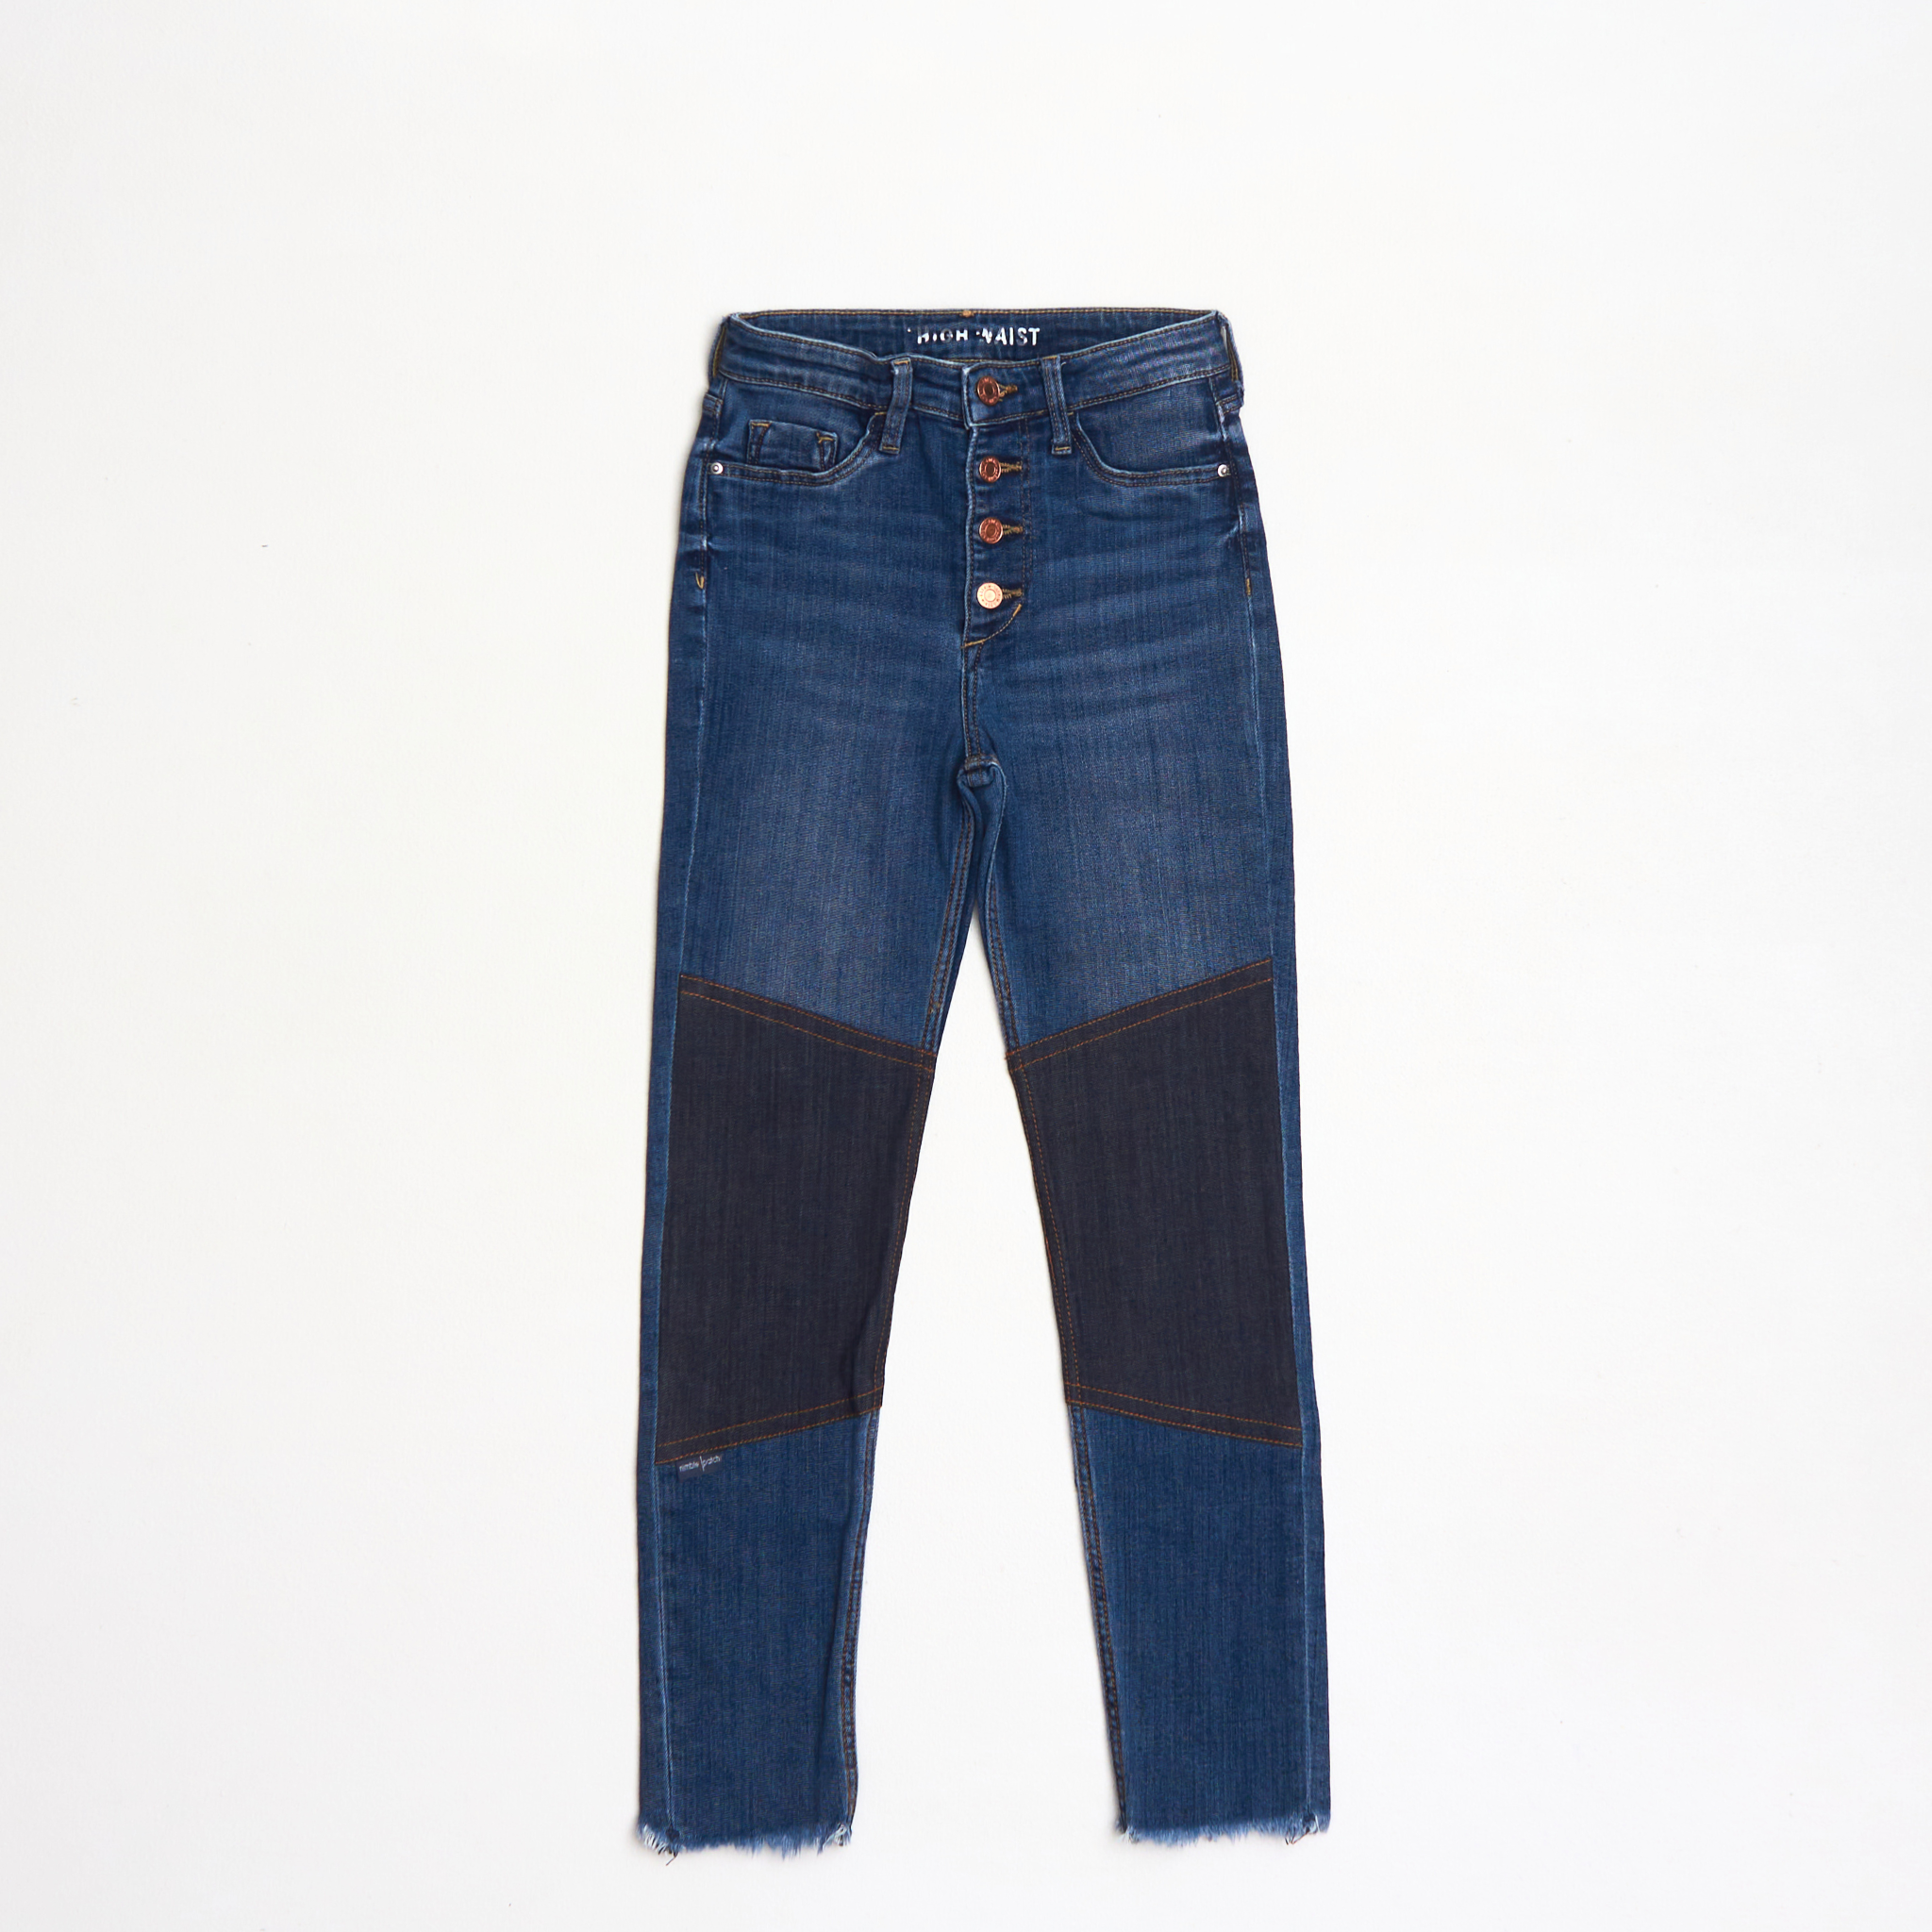 Slitstarka jeans ankellånga med hög midja, Slim fit, Stl 134, H&M